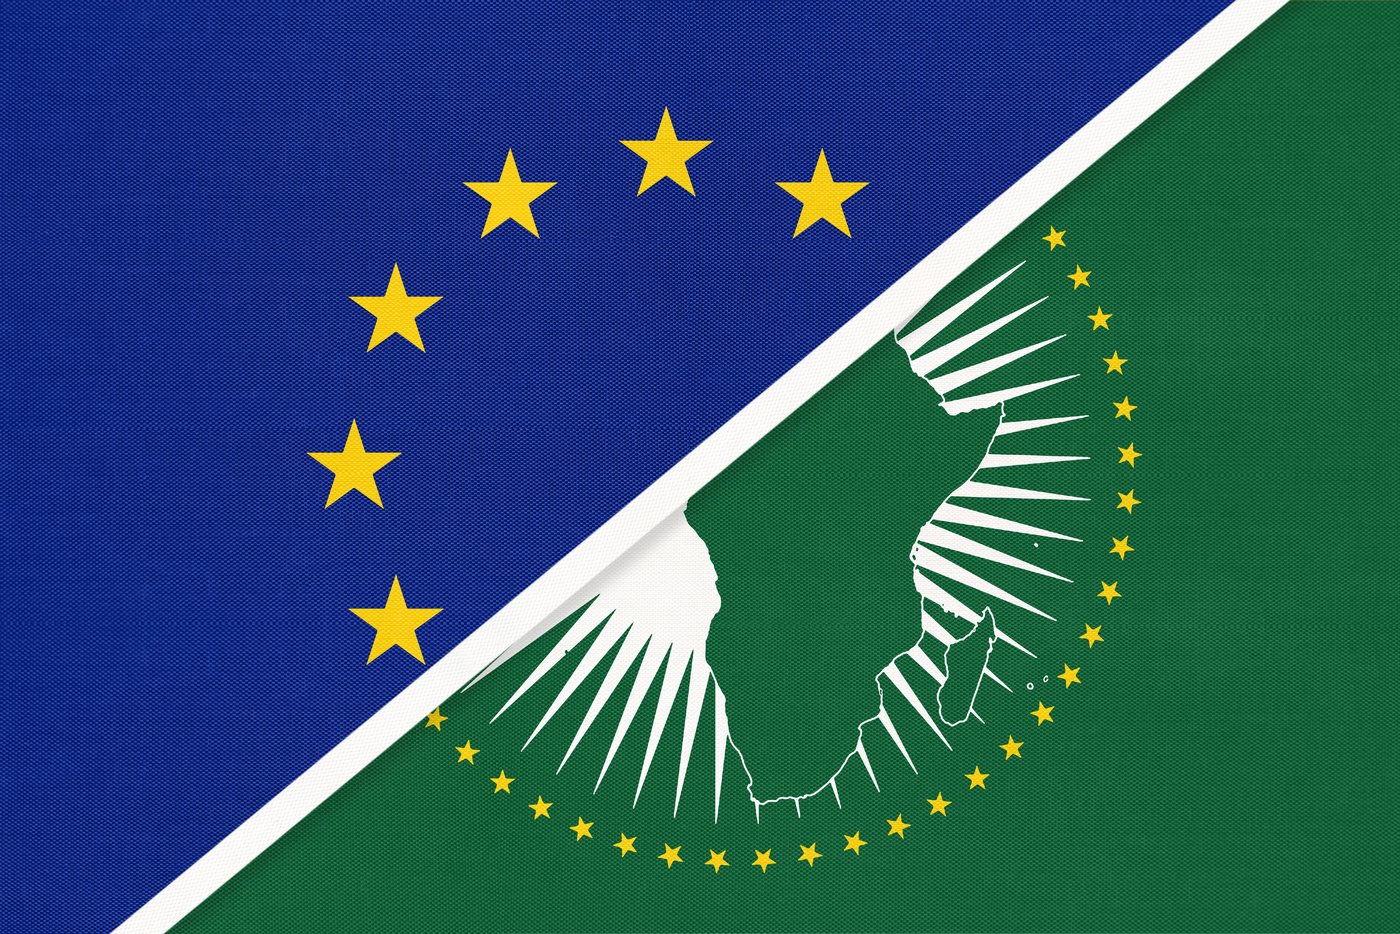 GuestAdhoc: EU-Africa-Relations